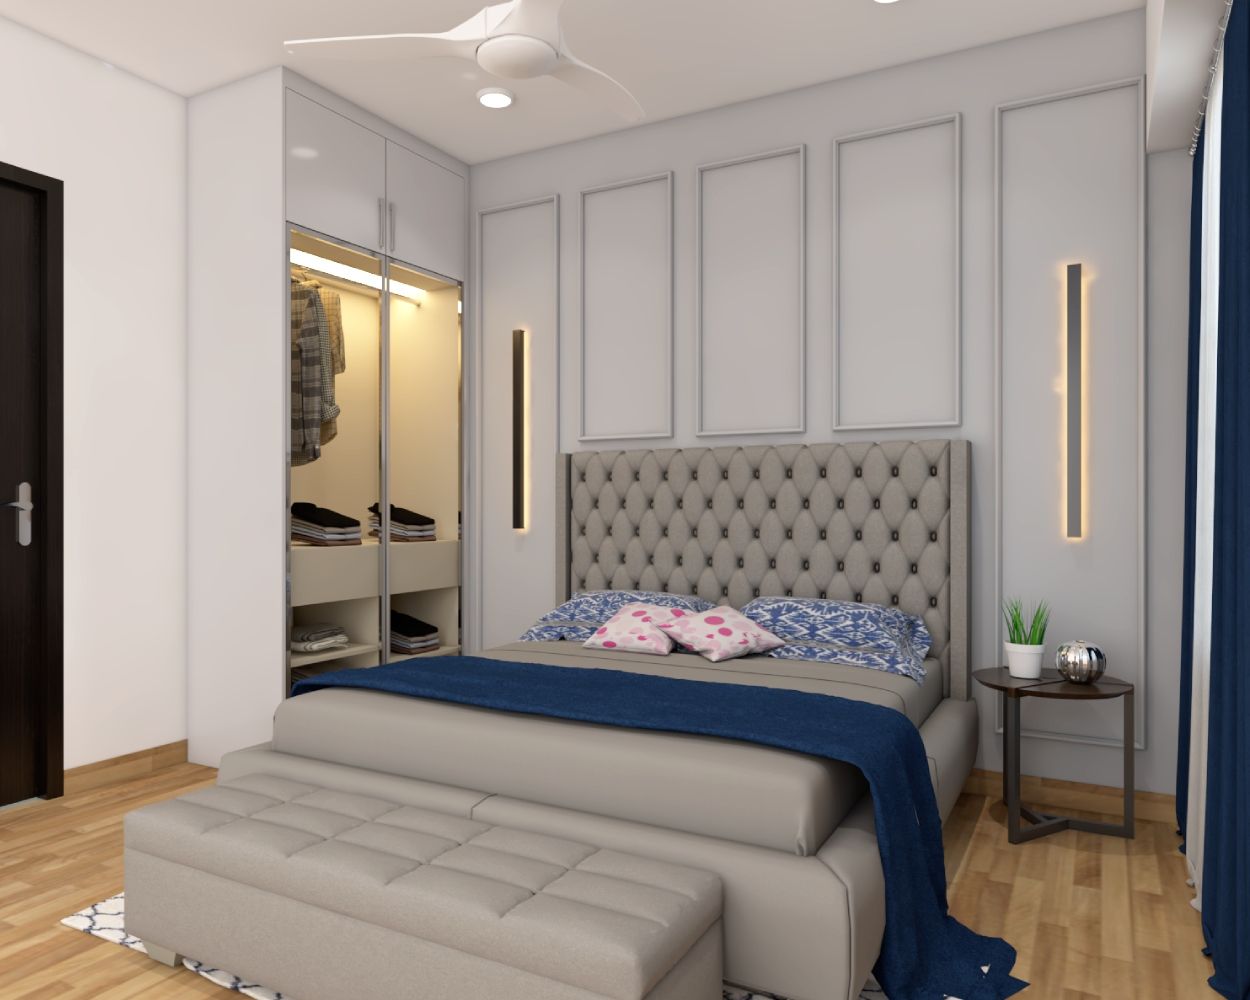 Modern Guest Bedroom Design With Recessed Spotlight